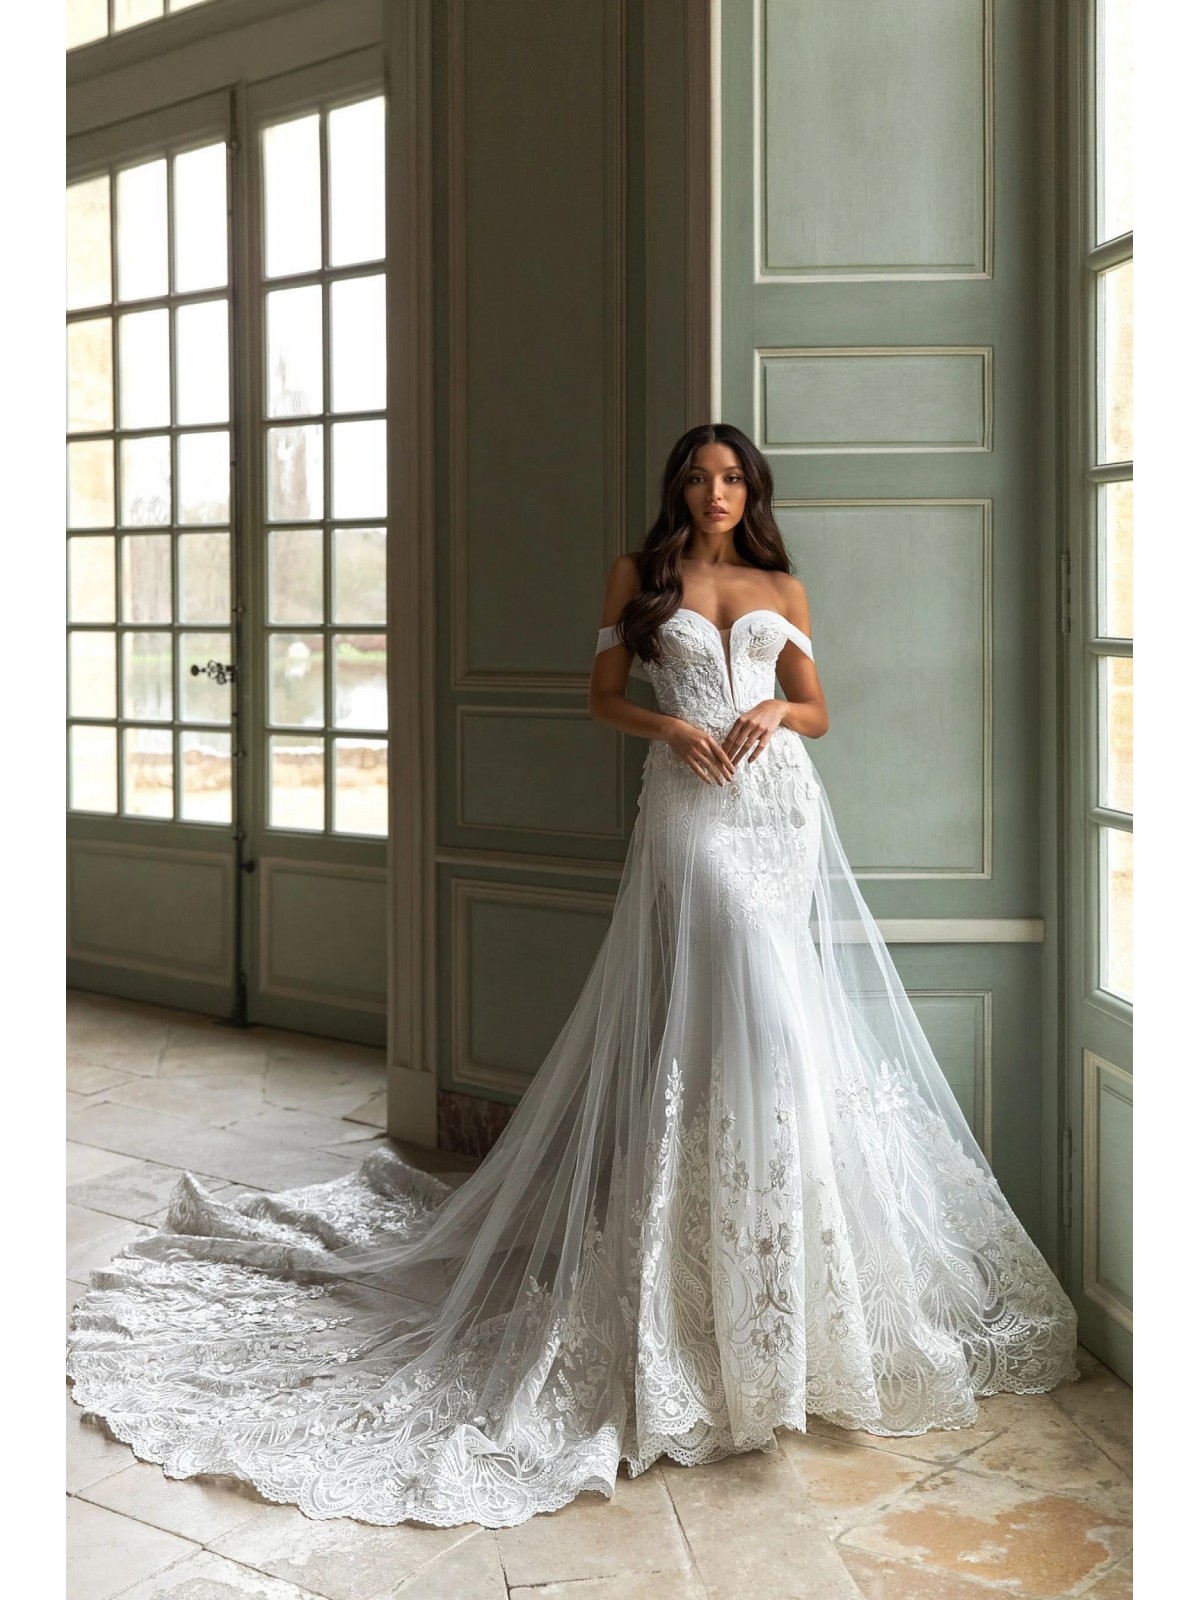 Luxury Wedding Dress - Elegance - LPLD-3217.00.17